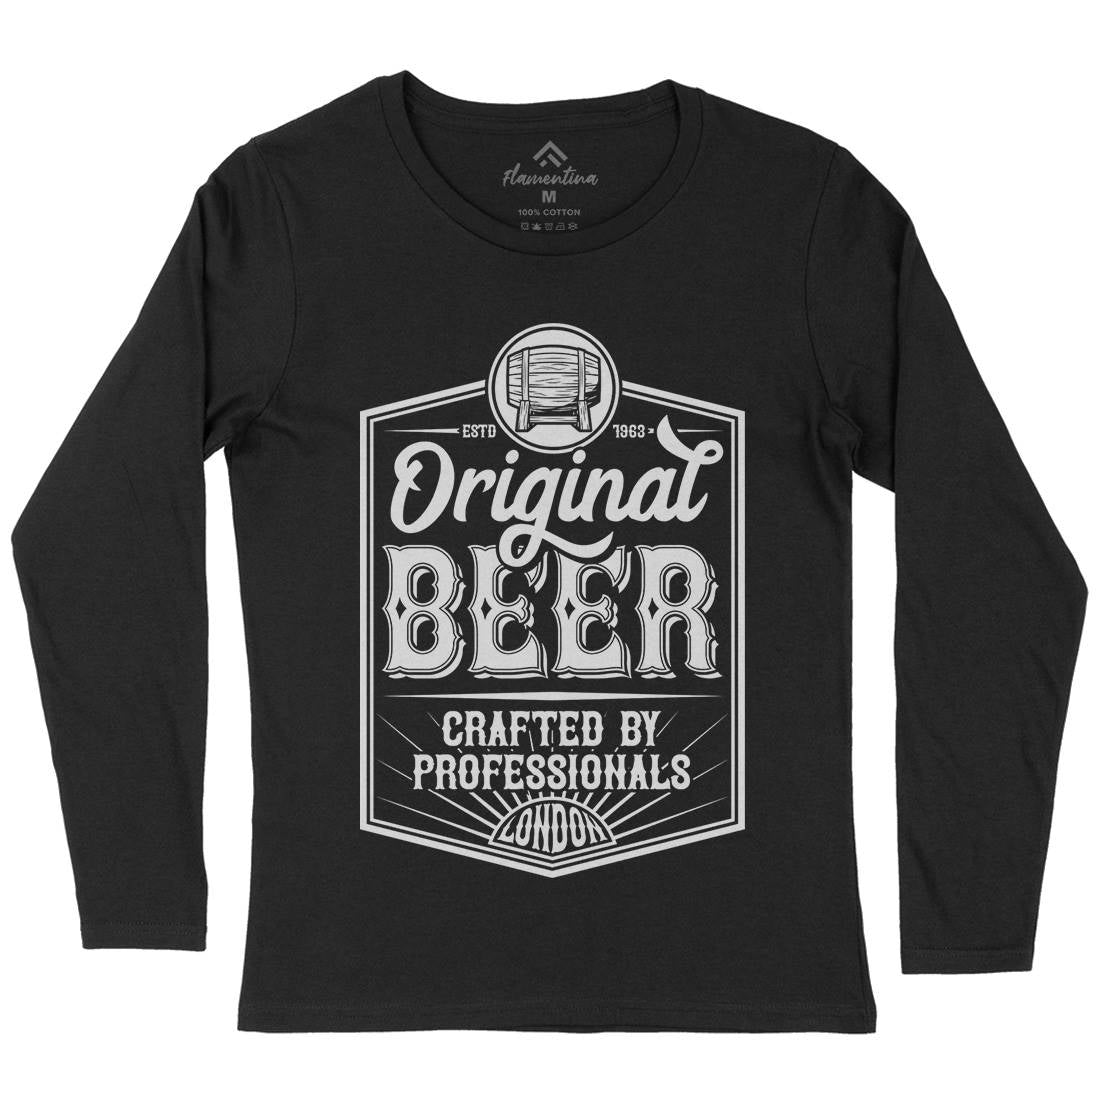 Original Beer Womens Long Sleeve T-Shirt Drinks B280